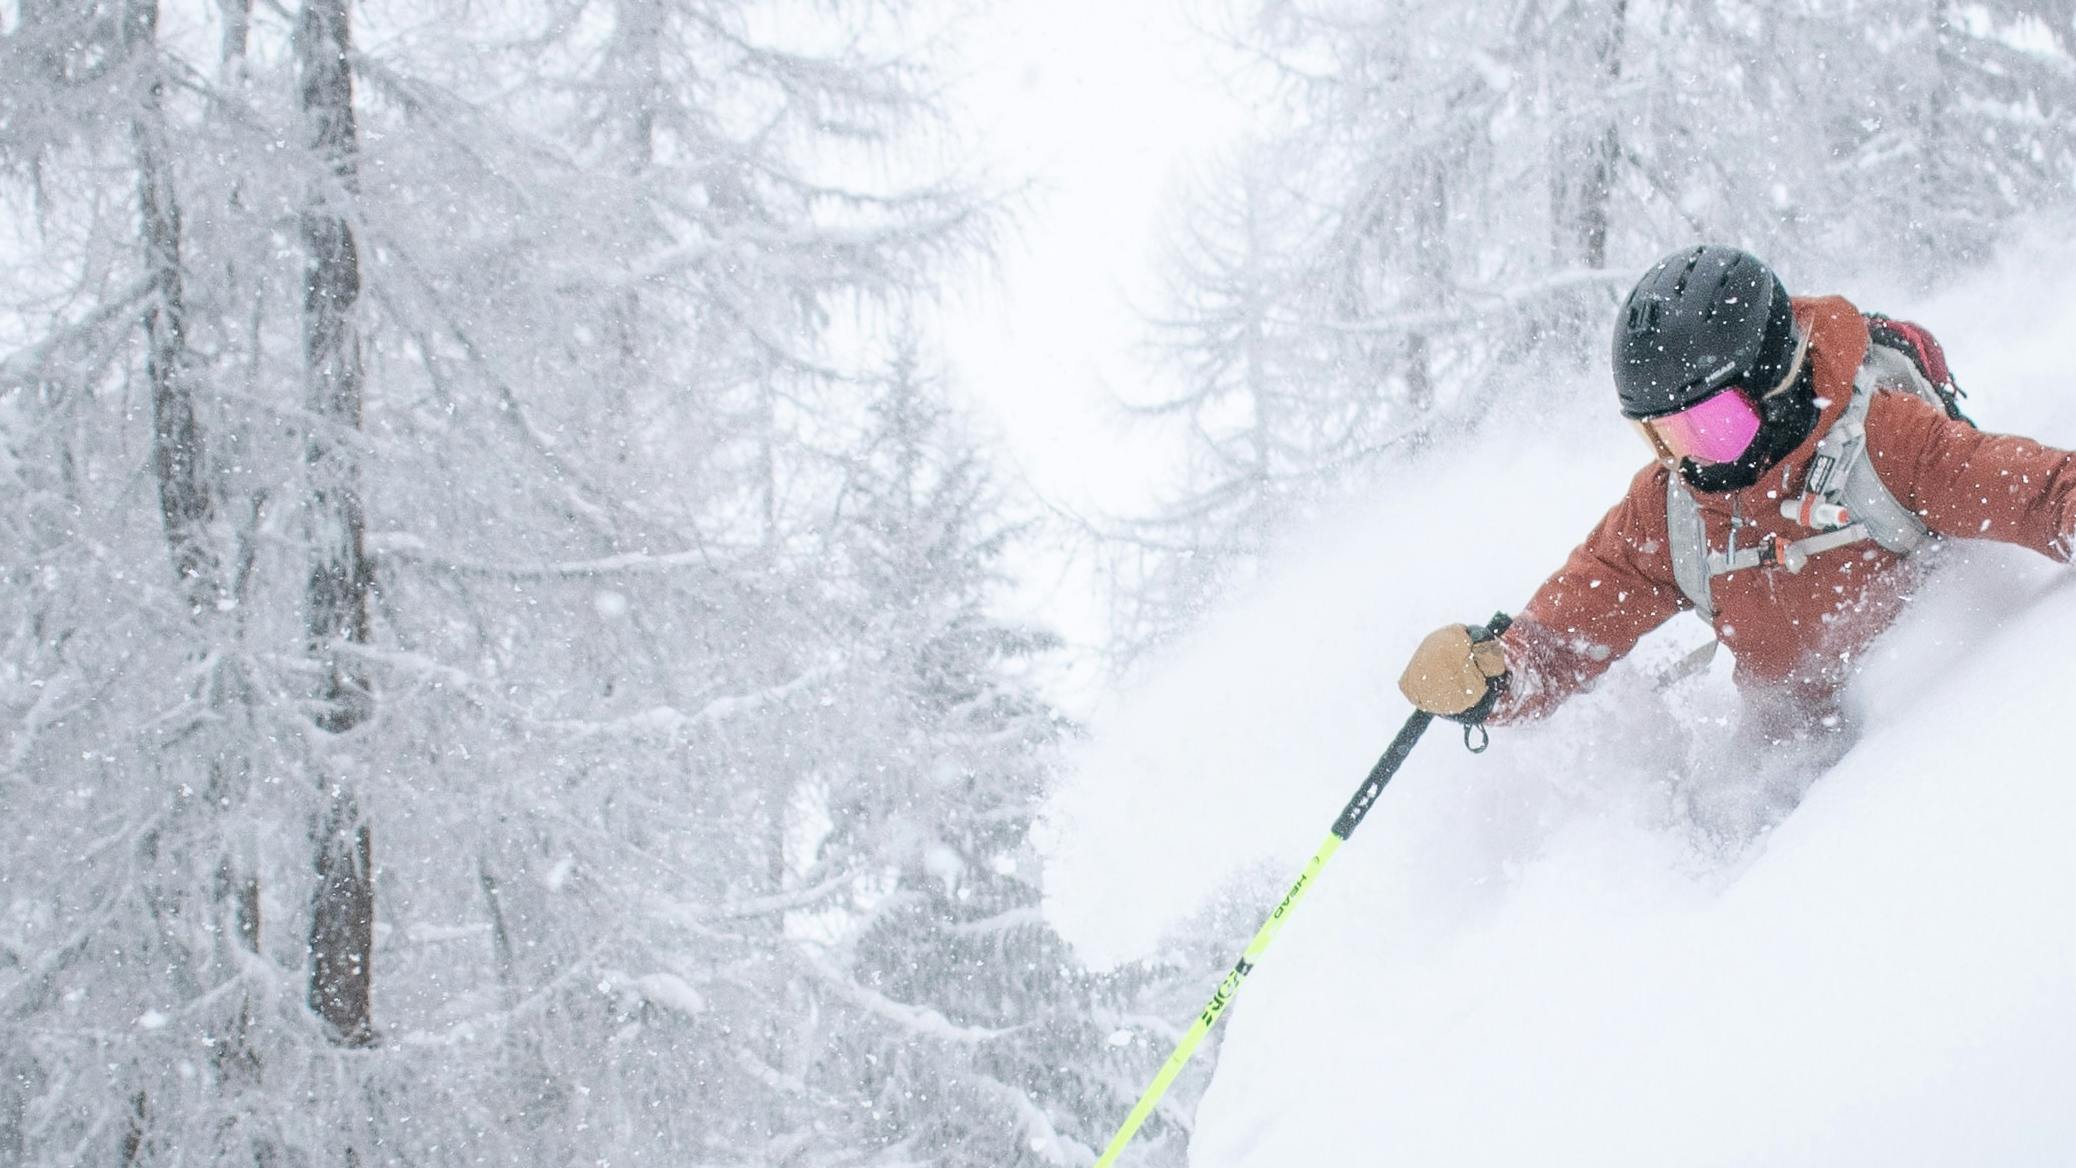 A skier navigates through waist-deep powder